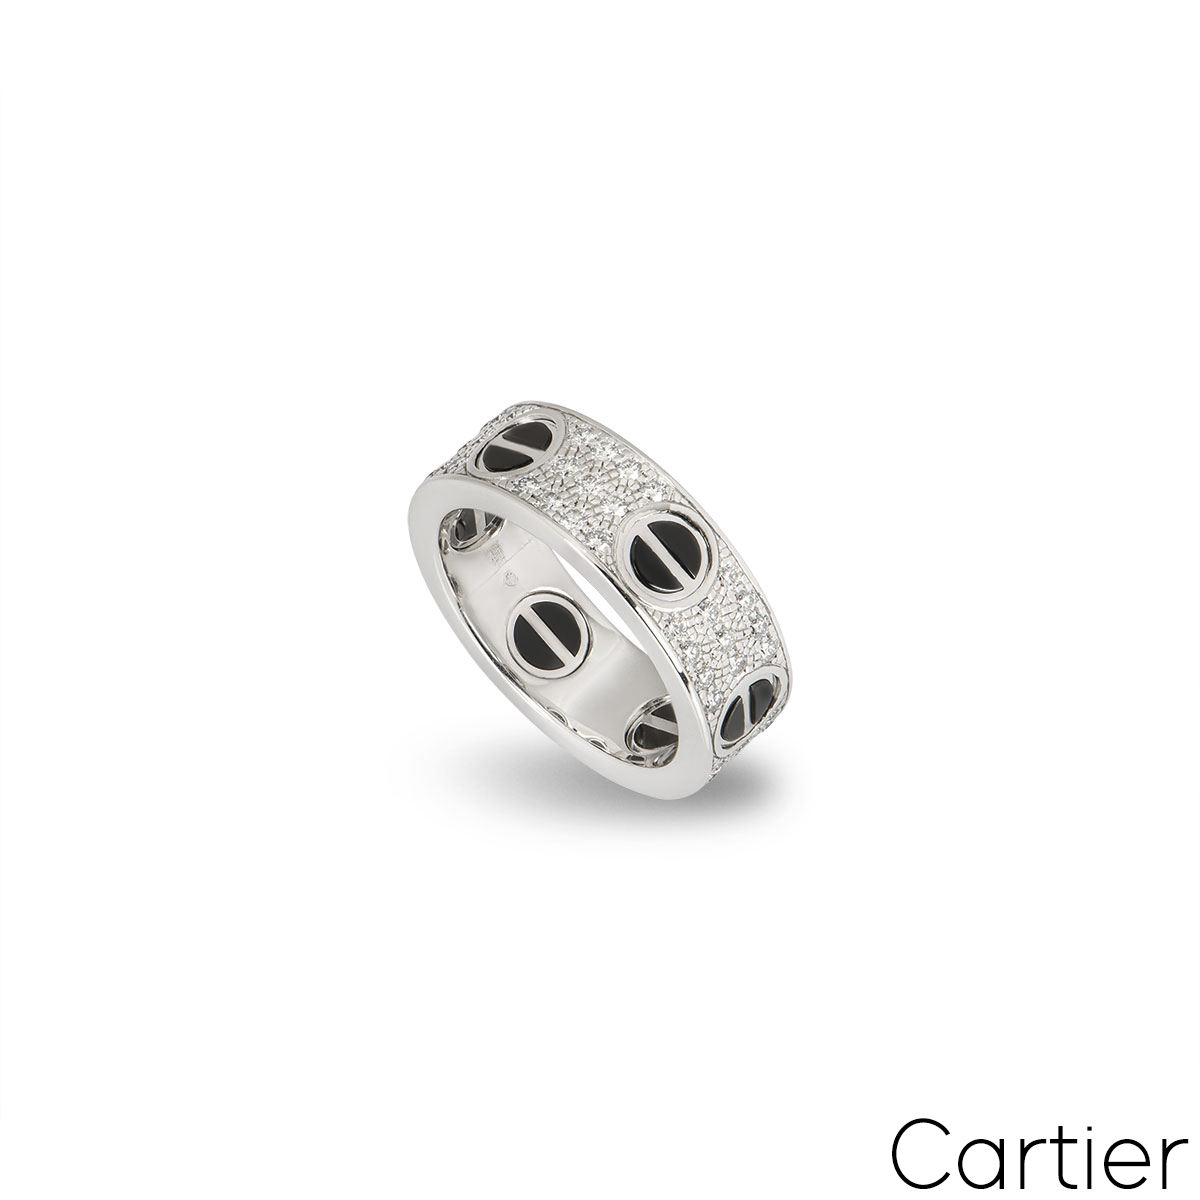 Cartier White Gold Diamond & Ceramic Love Ring Size 51 B4207600